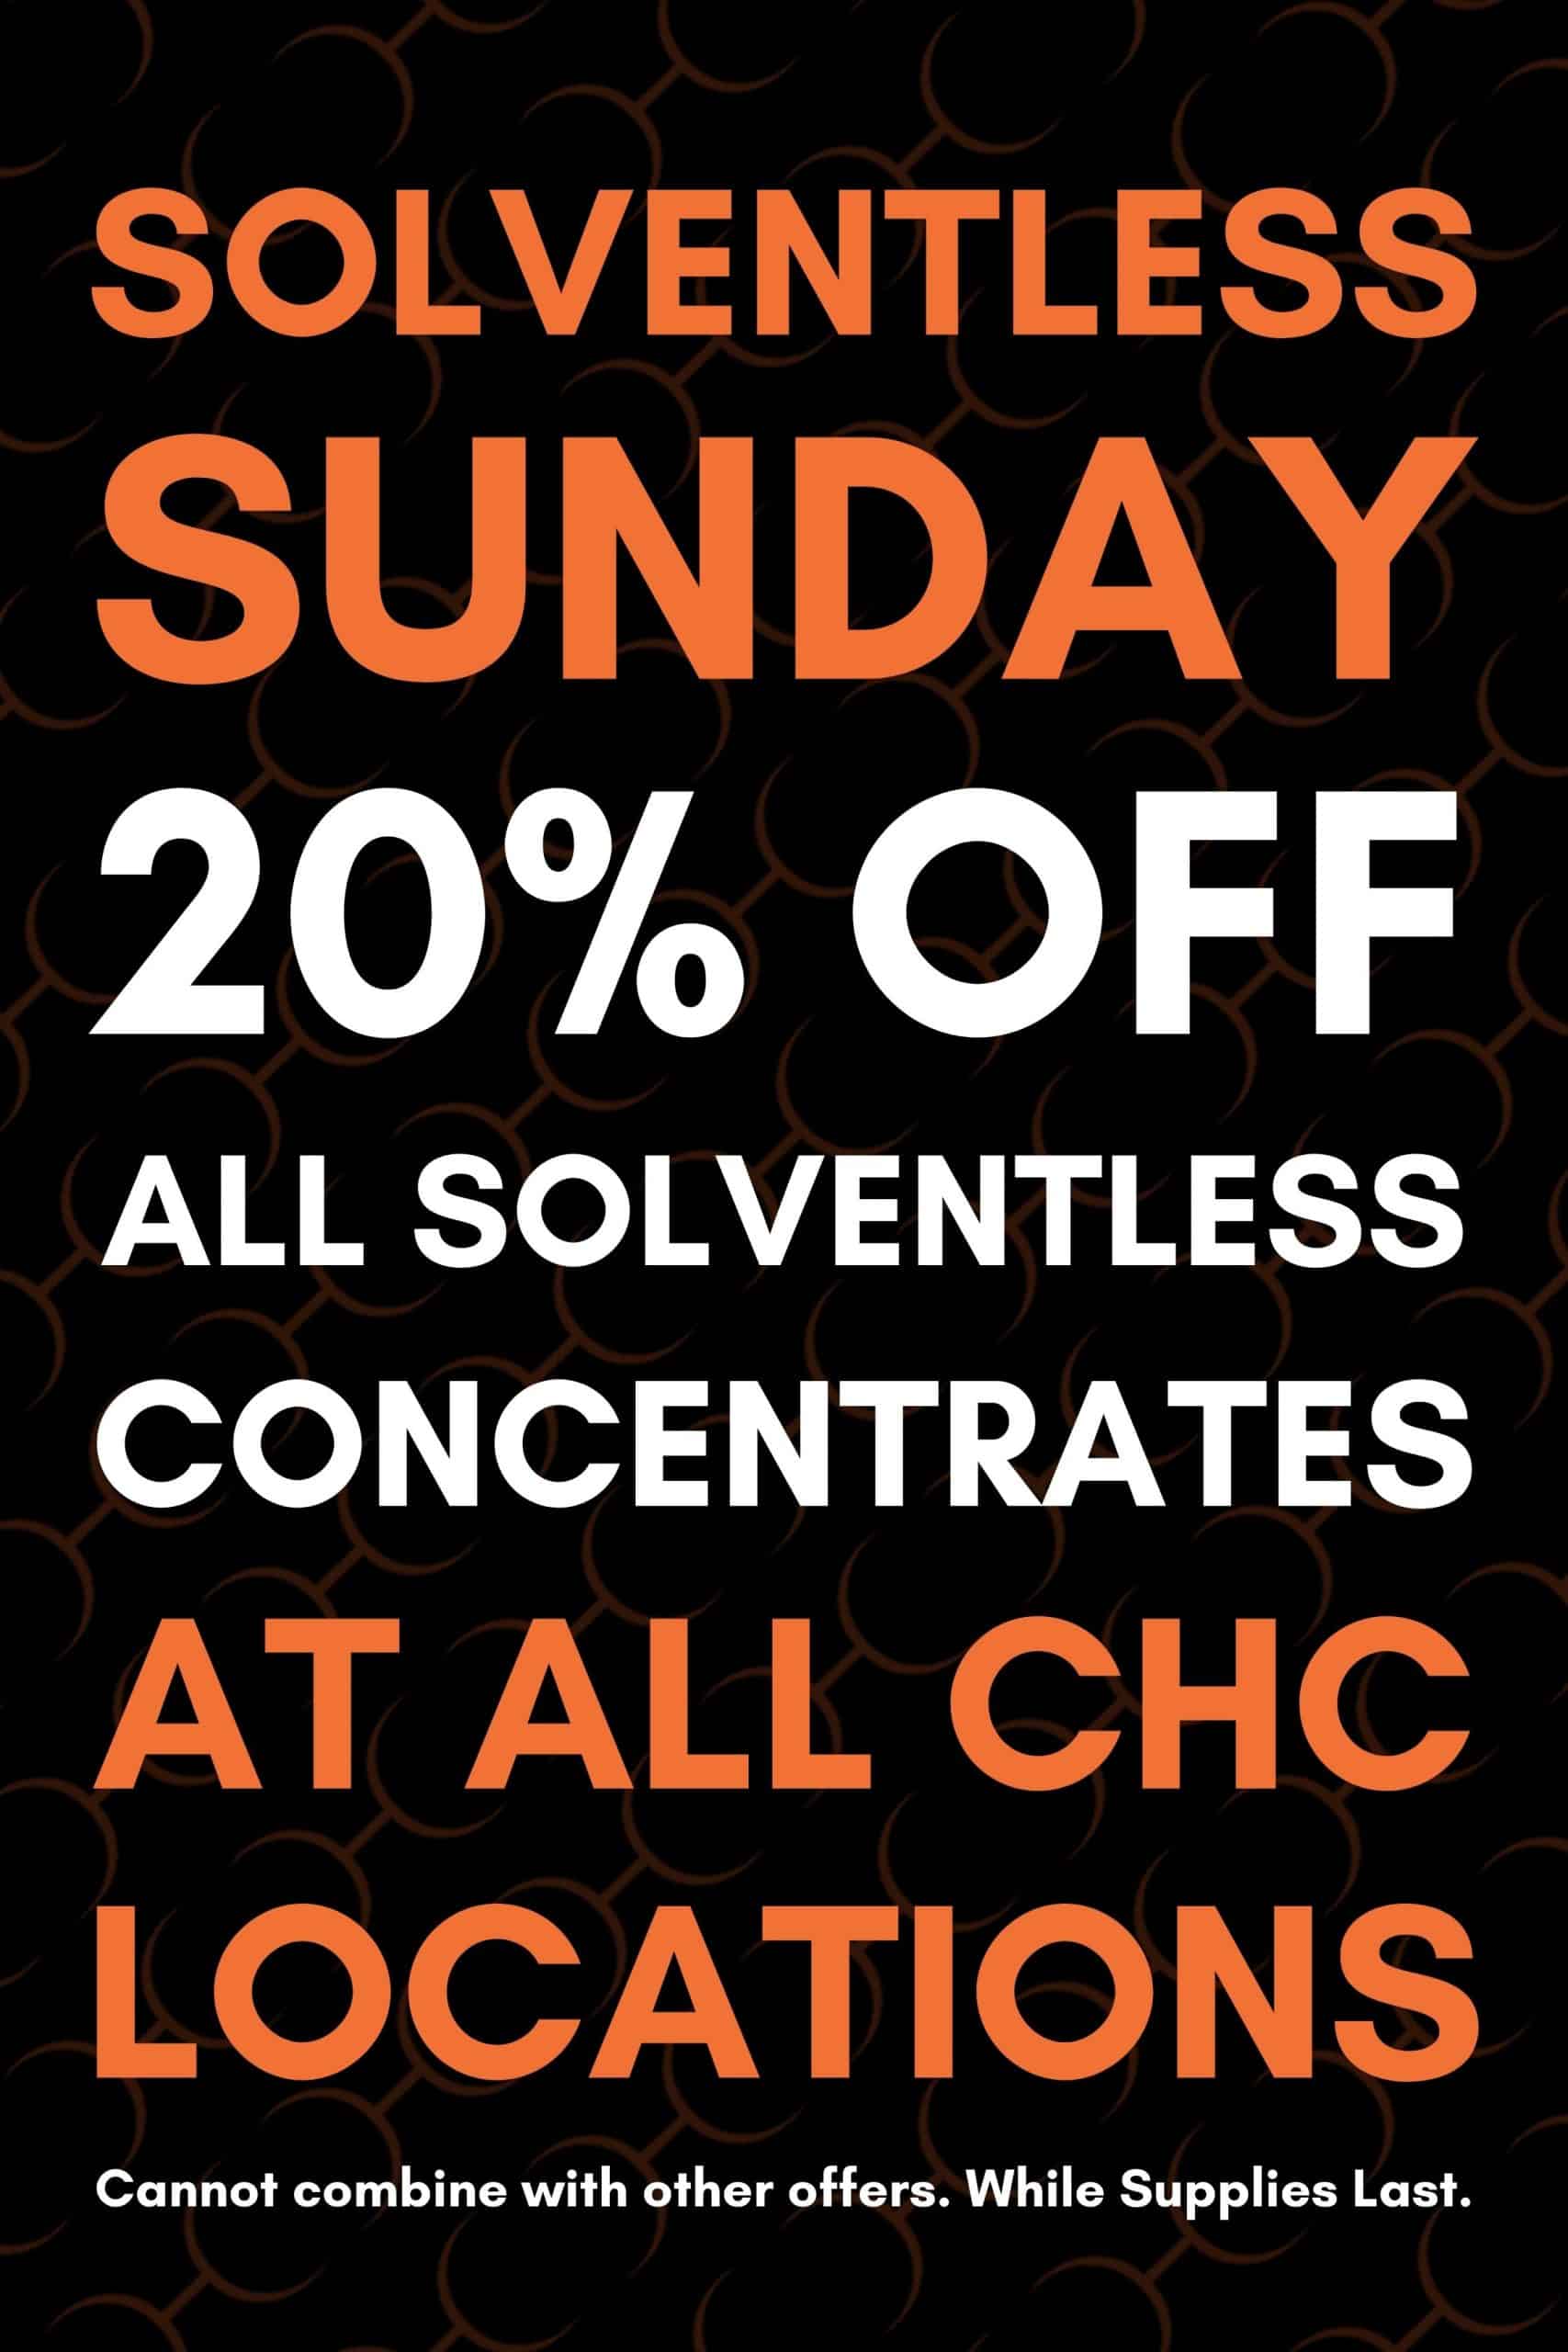 Solventless Sunday